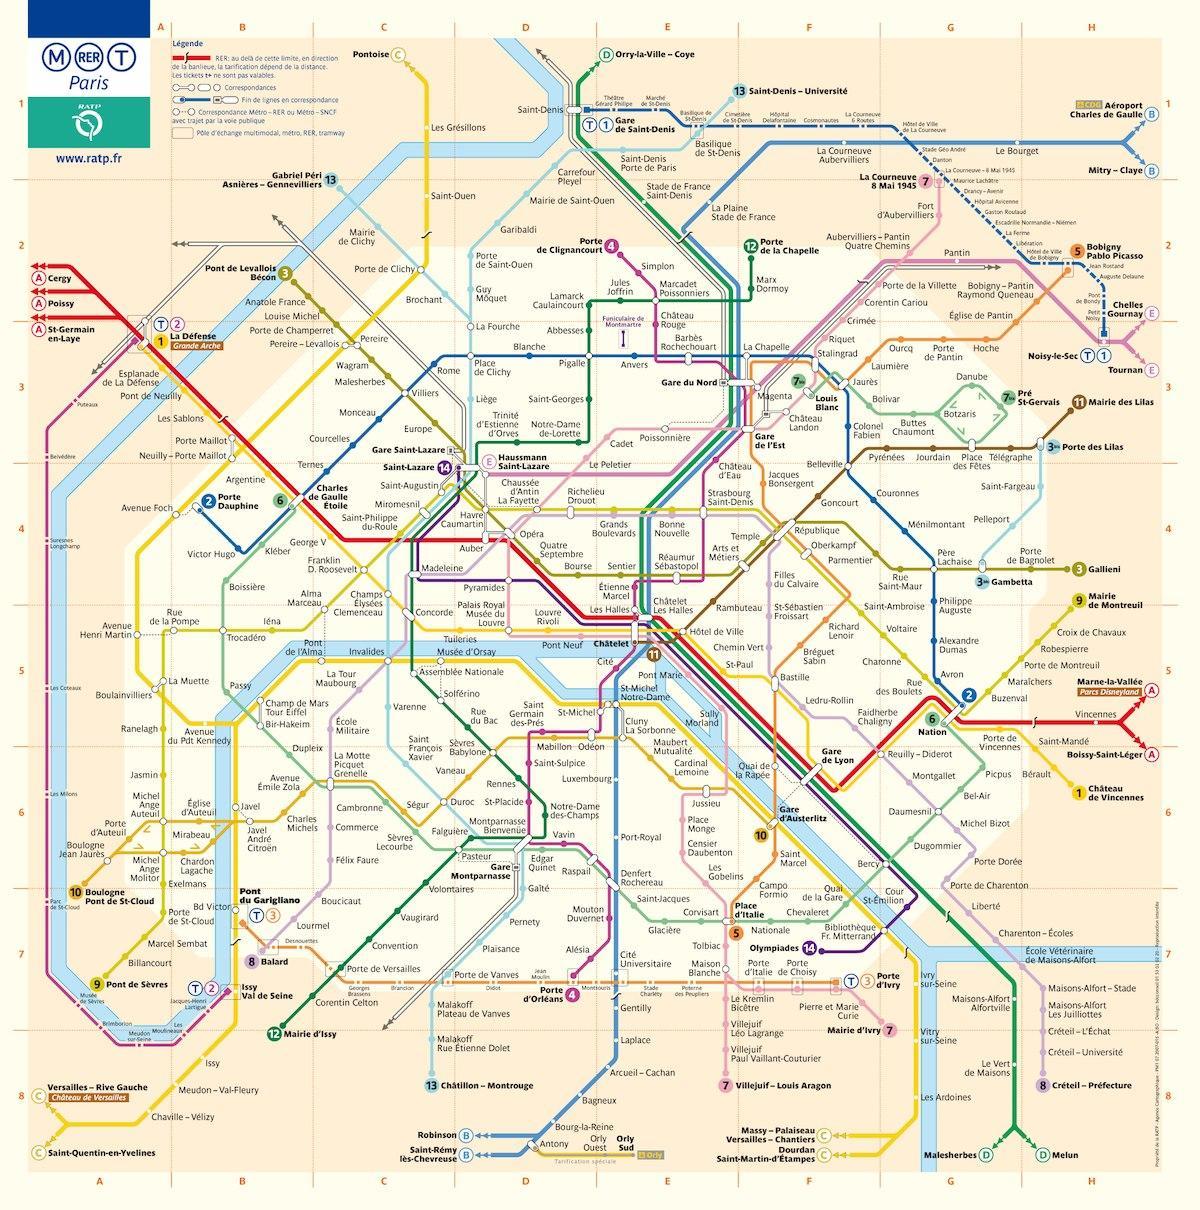 вашингтон метро мапата со улиците